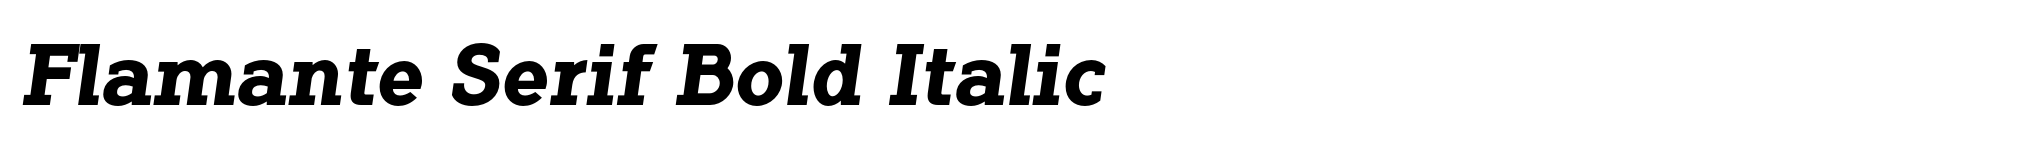 Flamante Serif Bold Italic image